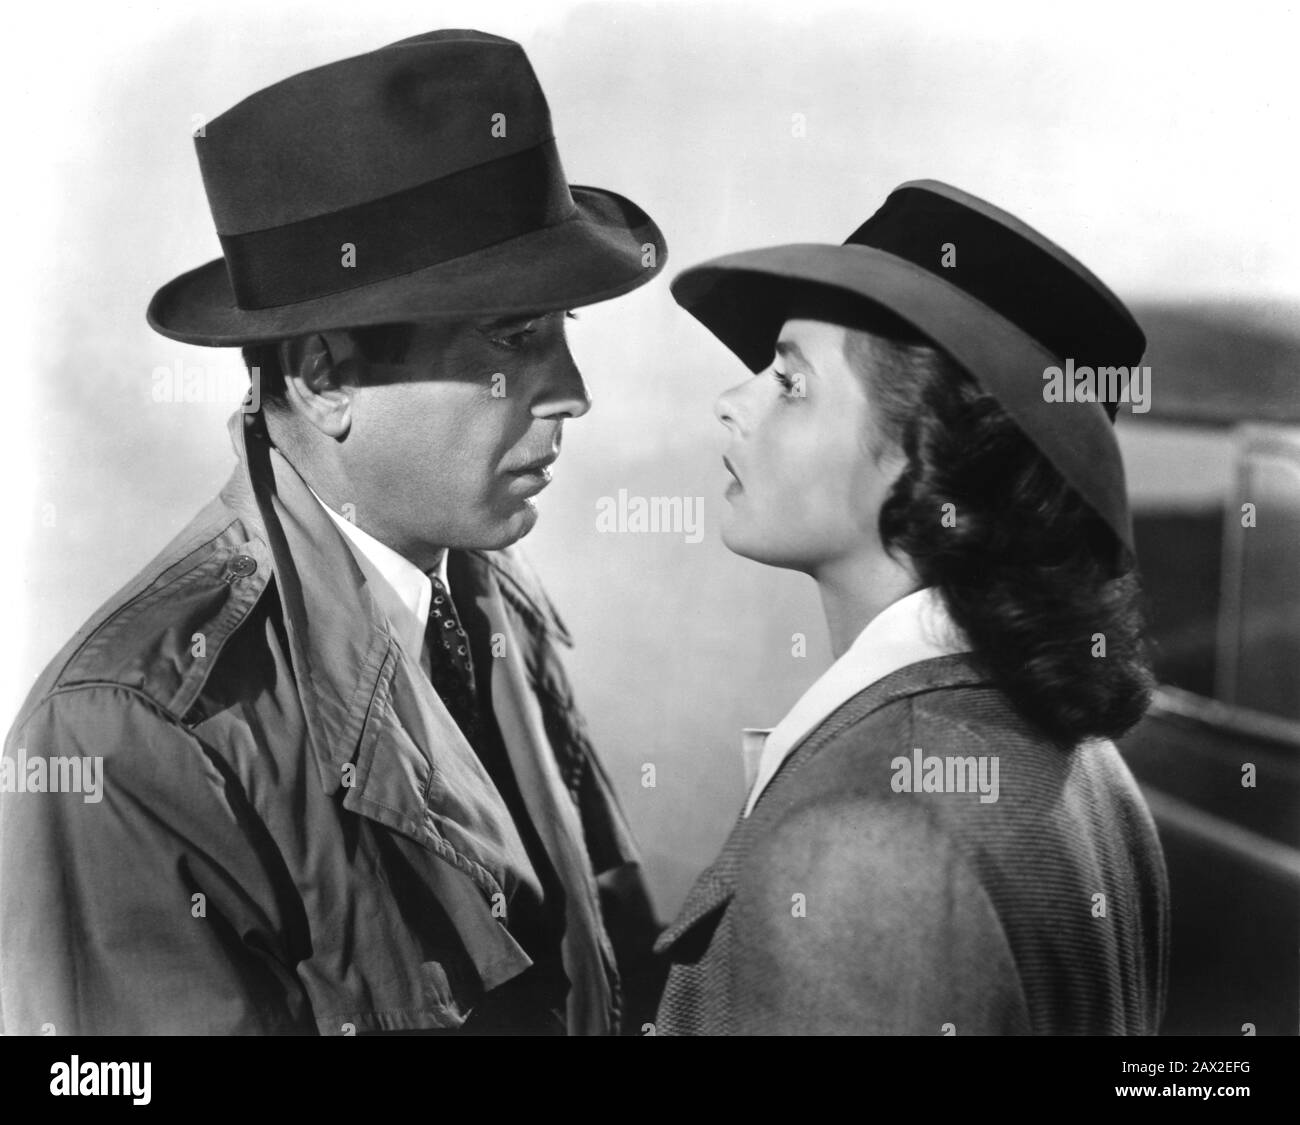 1943 , USA : Der Filmschauspieler HUMPHREY BOGART mit INGRID BERGMAN in CASABLANCA ( 1943 ) Von Michael Curtiz - FILM - KINO - FILM - Hollywood - Spy Story - Krieg II - Spionaggio - Guerra - Nebbia - Nebel - Poliziotto - Hut - cappello - Graben - impermeabile - Regenmantel - KULT - SCENA CULTO - FINALE - FILM - Liebhaber - innamorati - amanti - profilo - Profil - Kuss - bacio - nebbia - Nebel - -- Archivio GBB Stockfoto